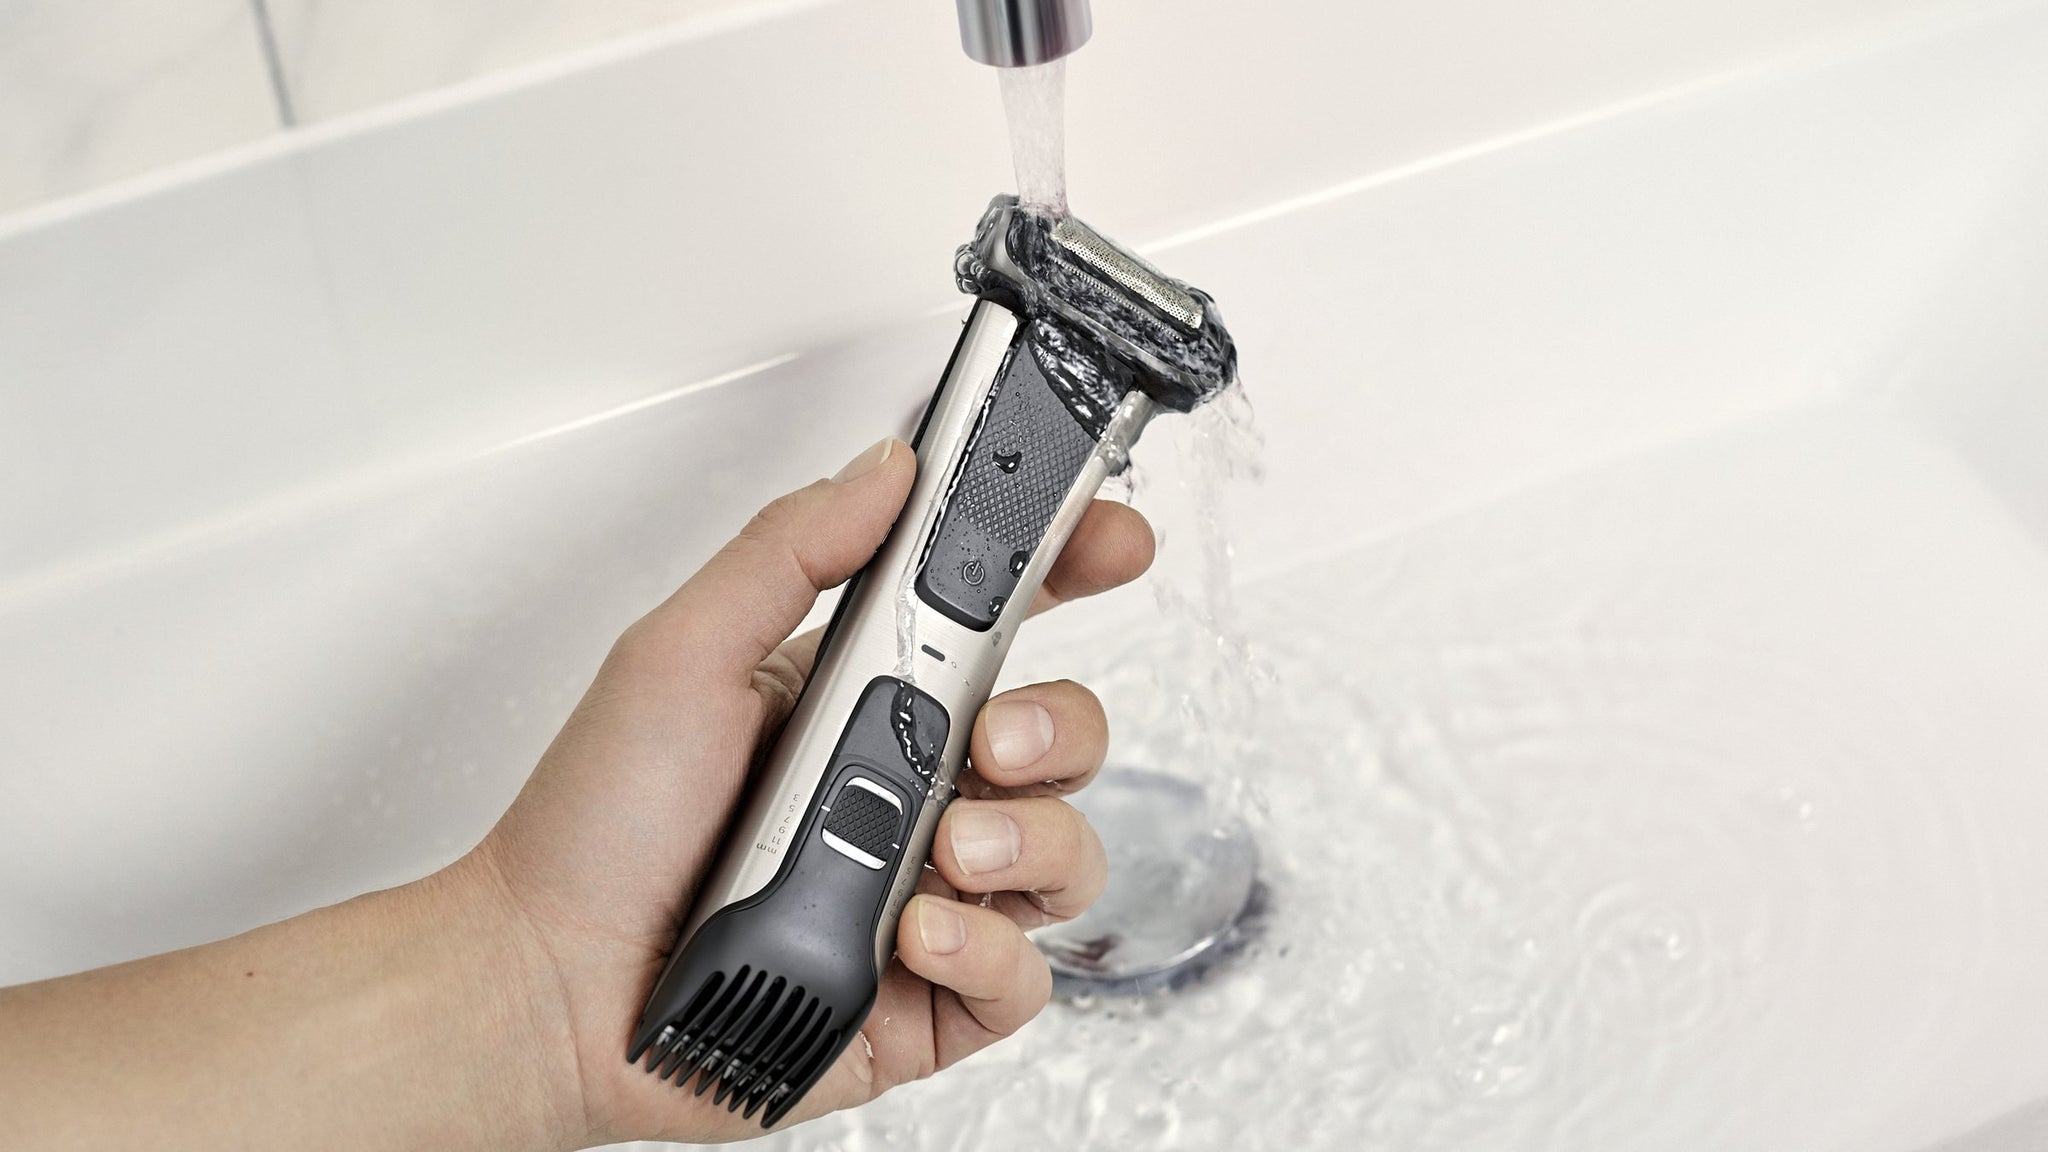 philips series 7000 showerproof body groomer and trimmer